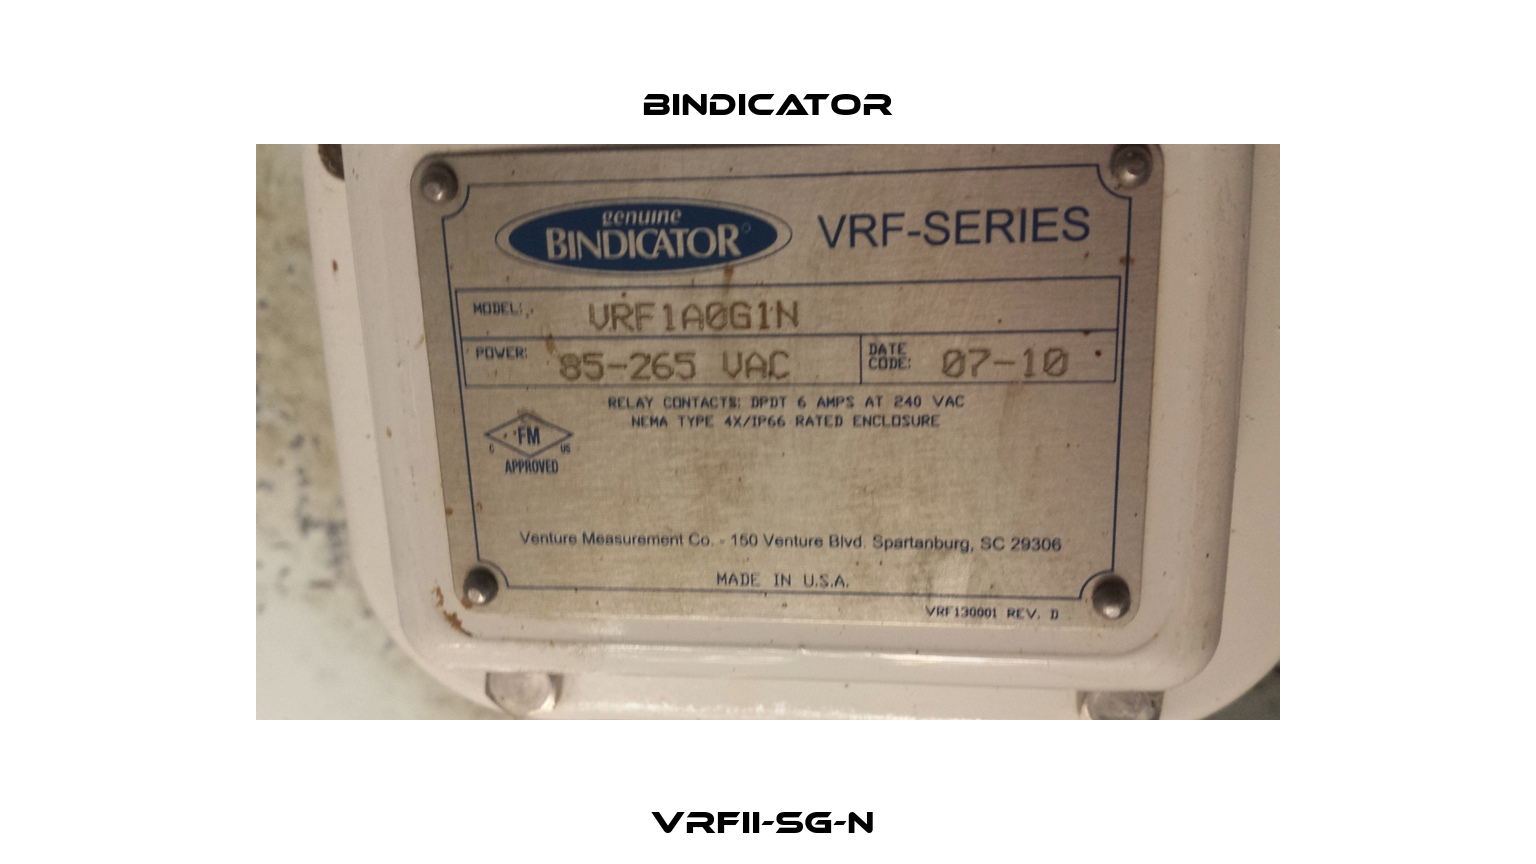 VRFII-SG-N  Bindicator